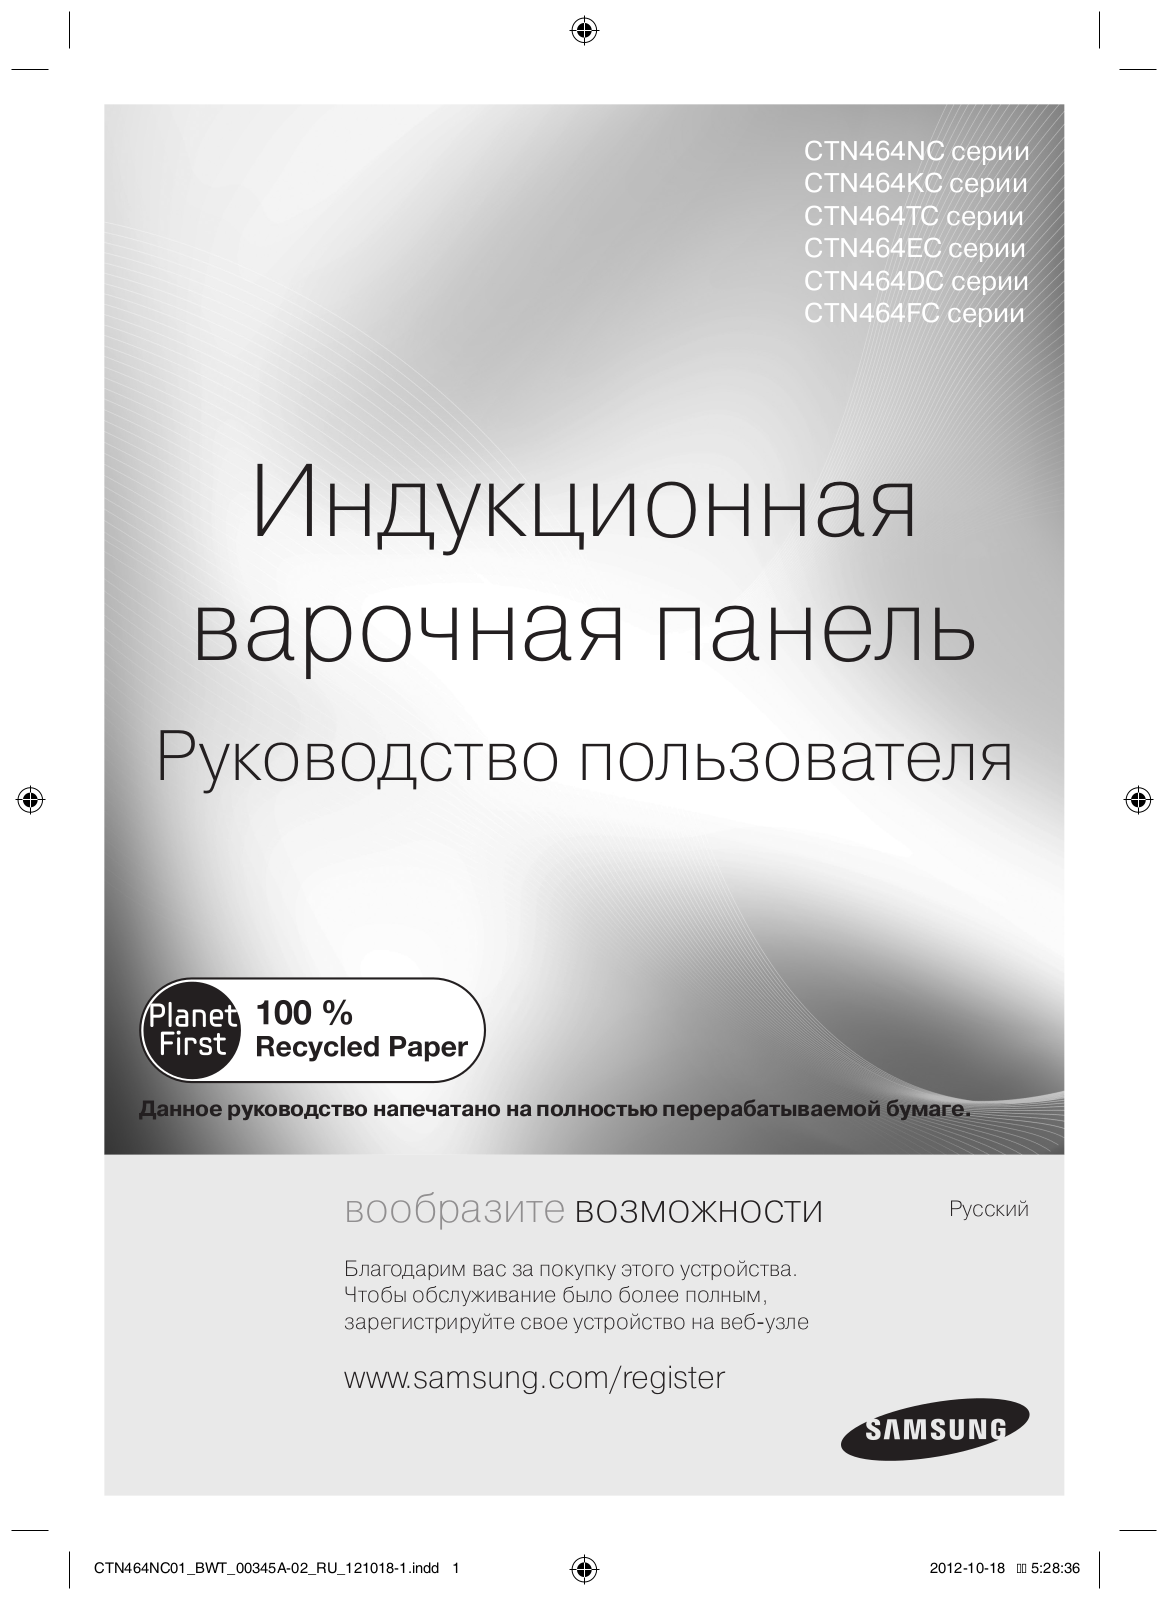 Samsung CTN464KC01 User Manual